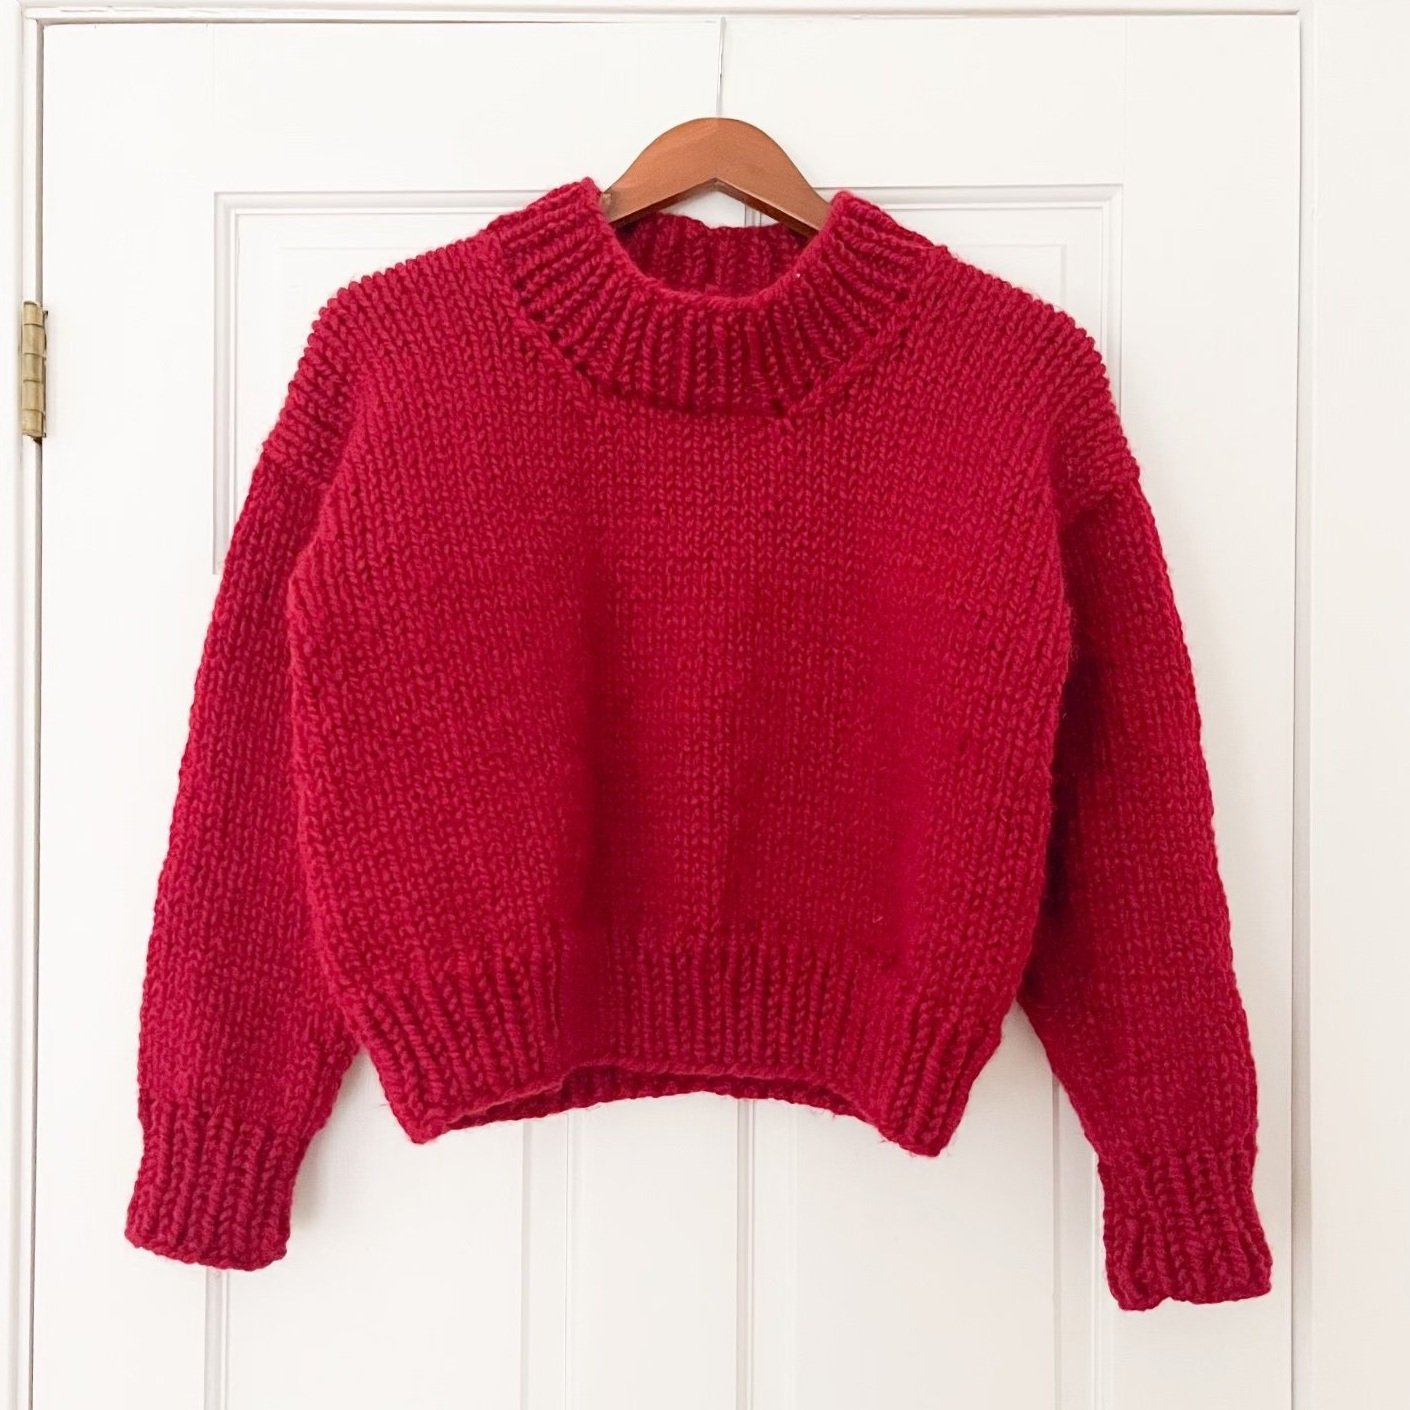 FREE Simple Cozy Knit Sweater Pattern